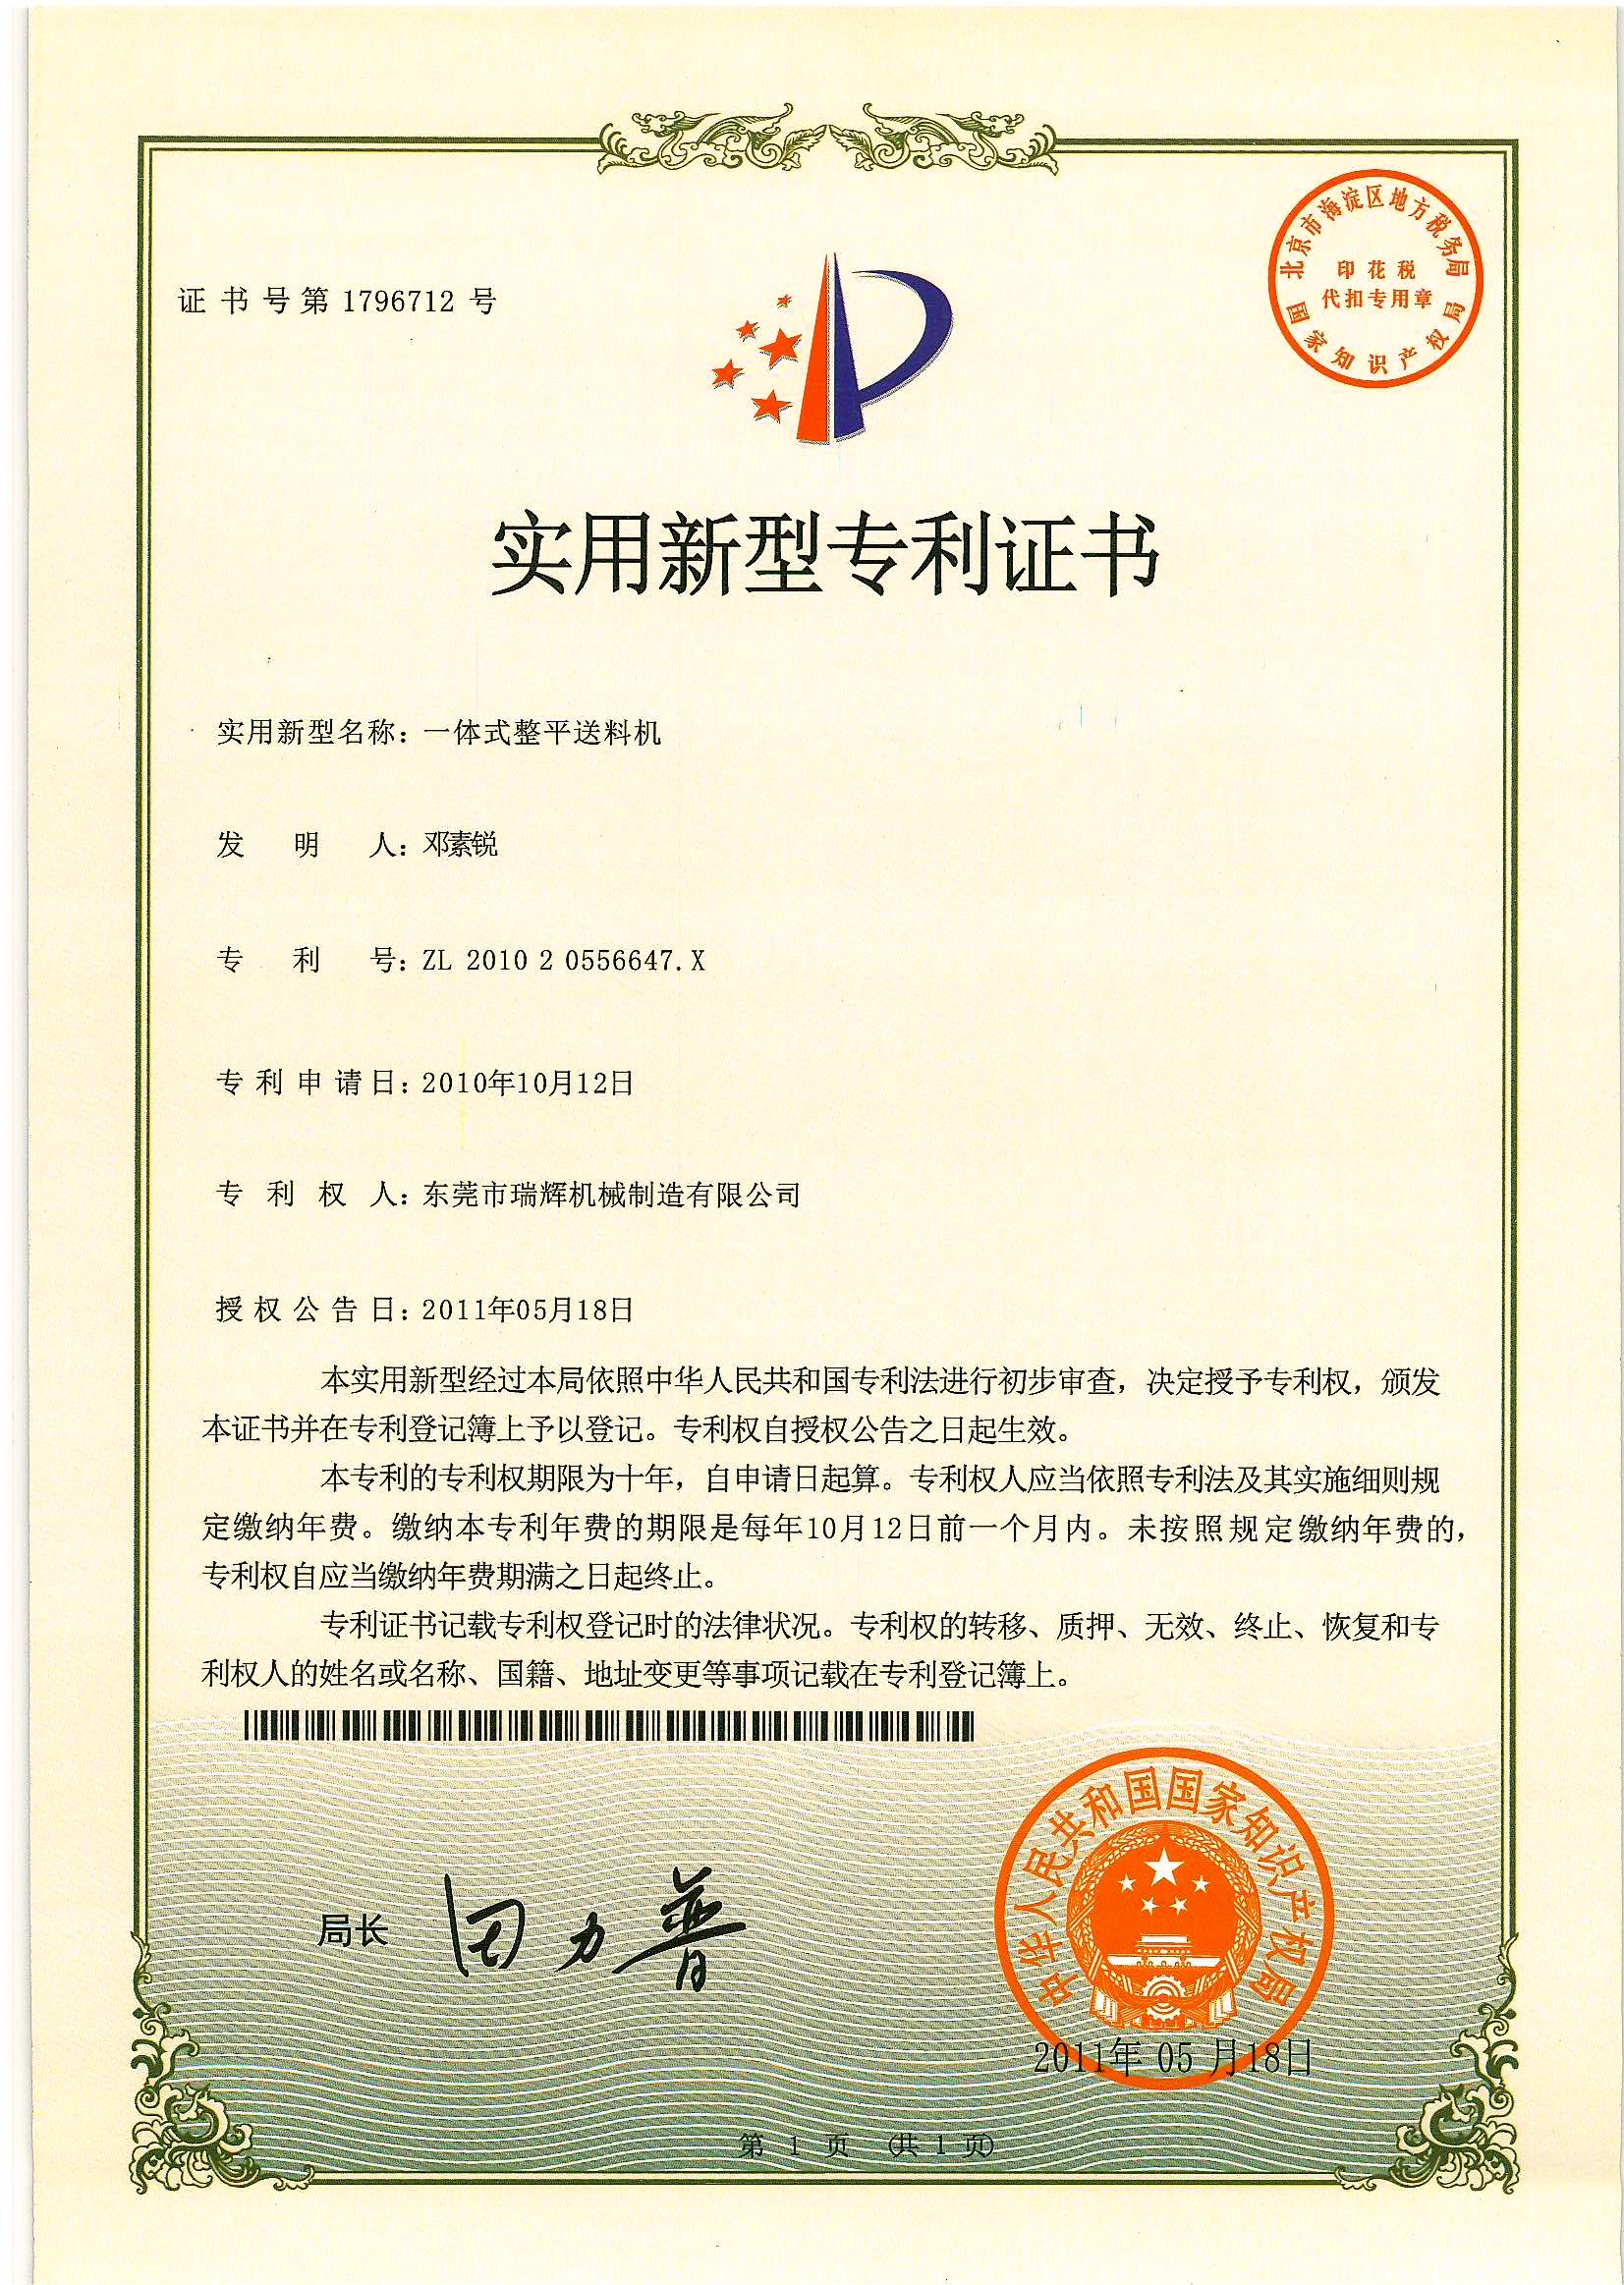 Chine GUANGDONG RUIHUI INTELLIGENT TECHNOLOGY CO., LTD. Certifications